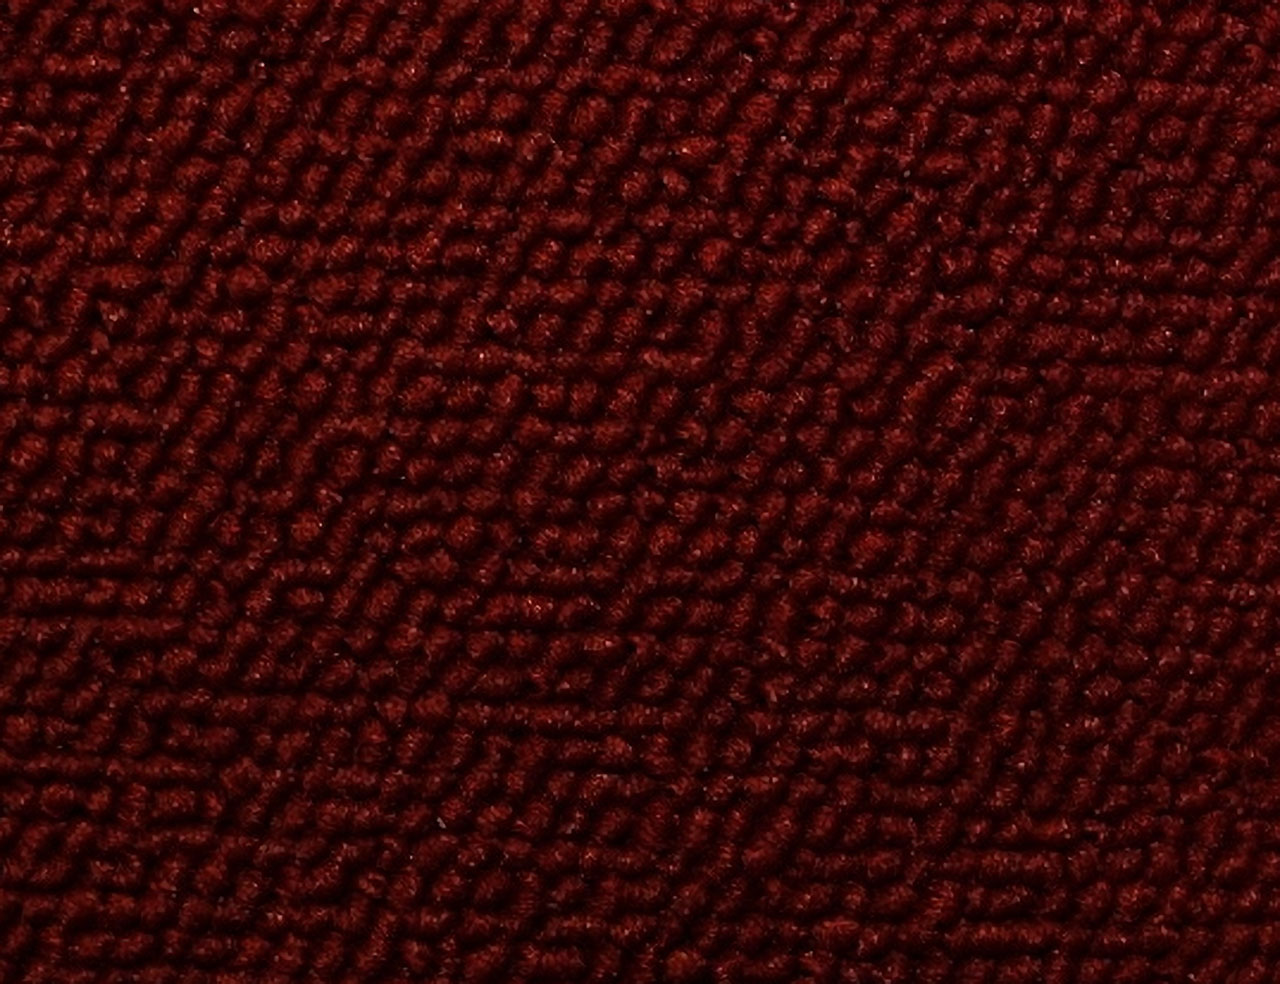 Holden Standard EH Standard Panel Van C48 Bolero Red Carpet (Image 1 of 1)